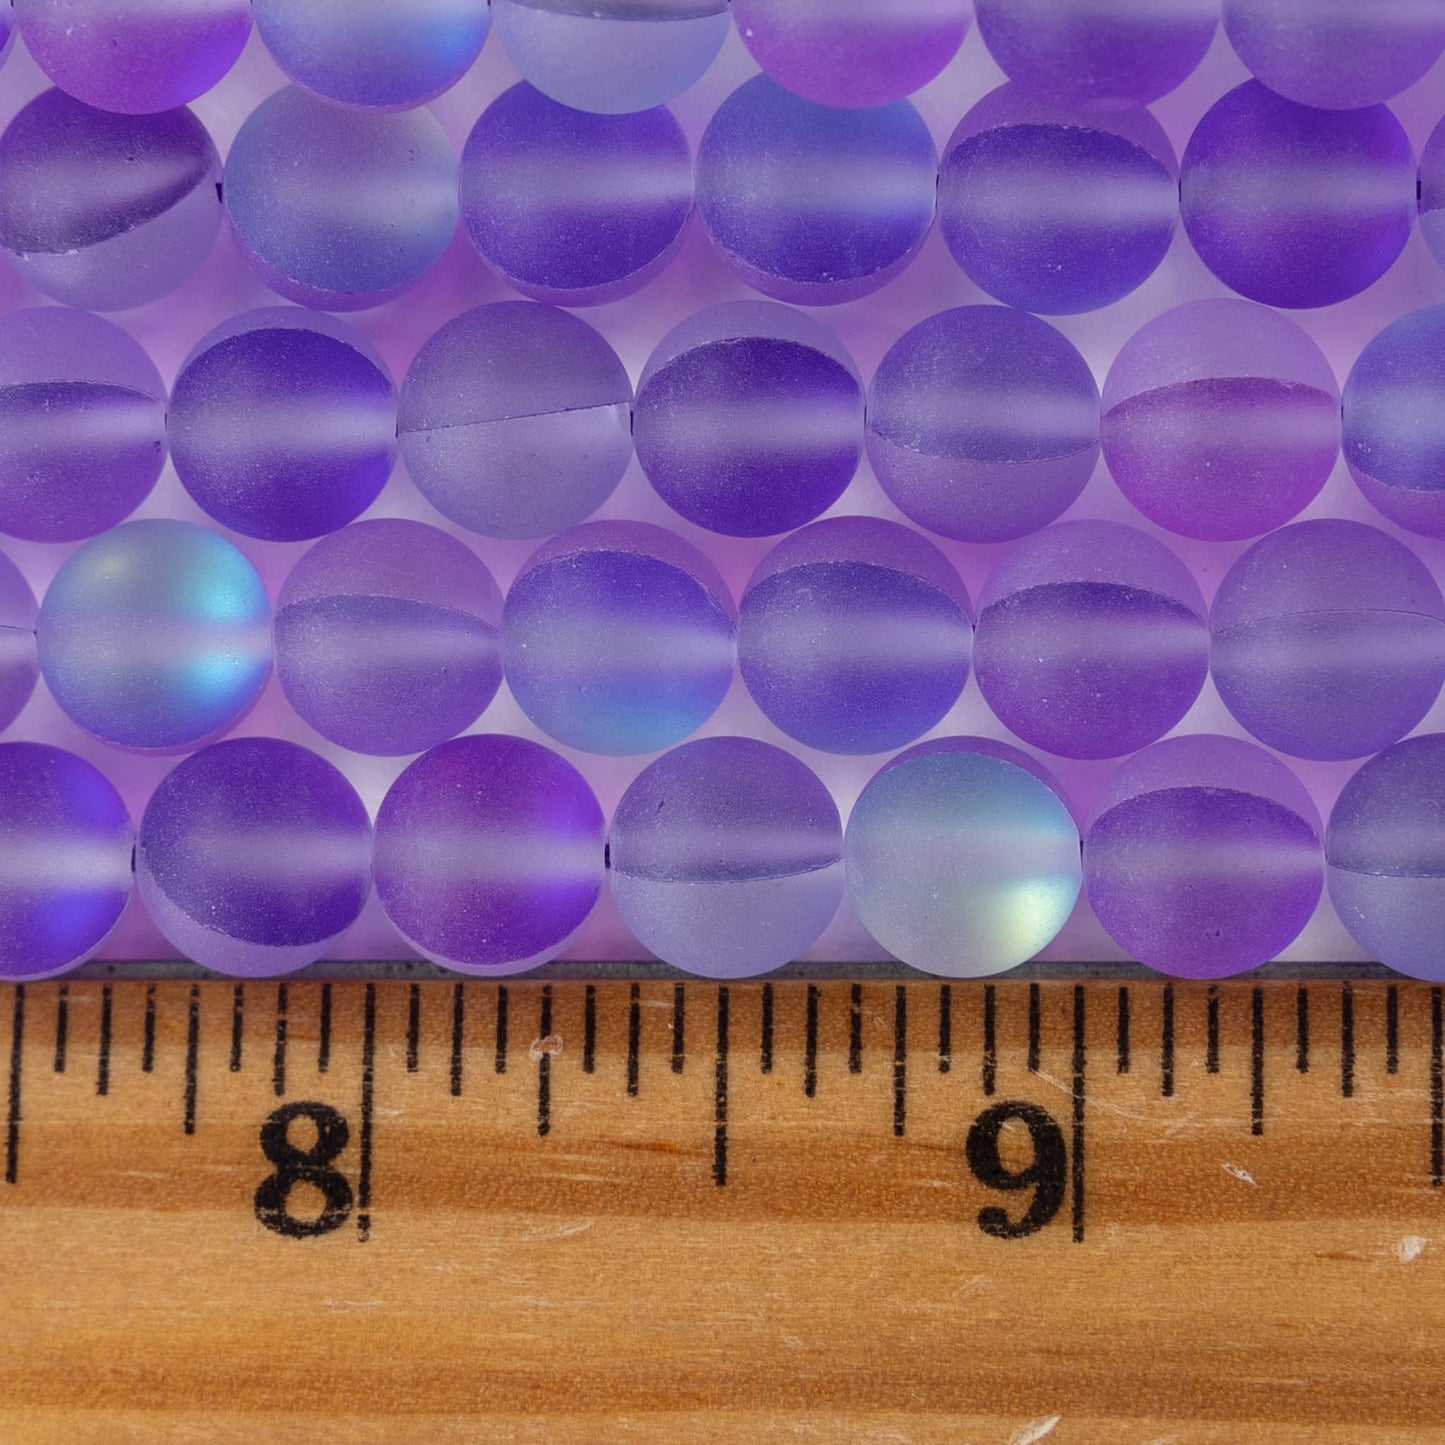 8mm Round Glass Beads - Lavender Matte Mermaid Quartz - 16 inches